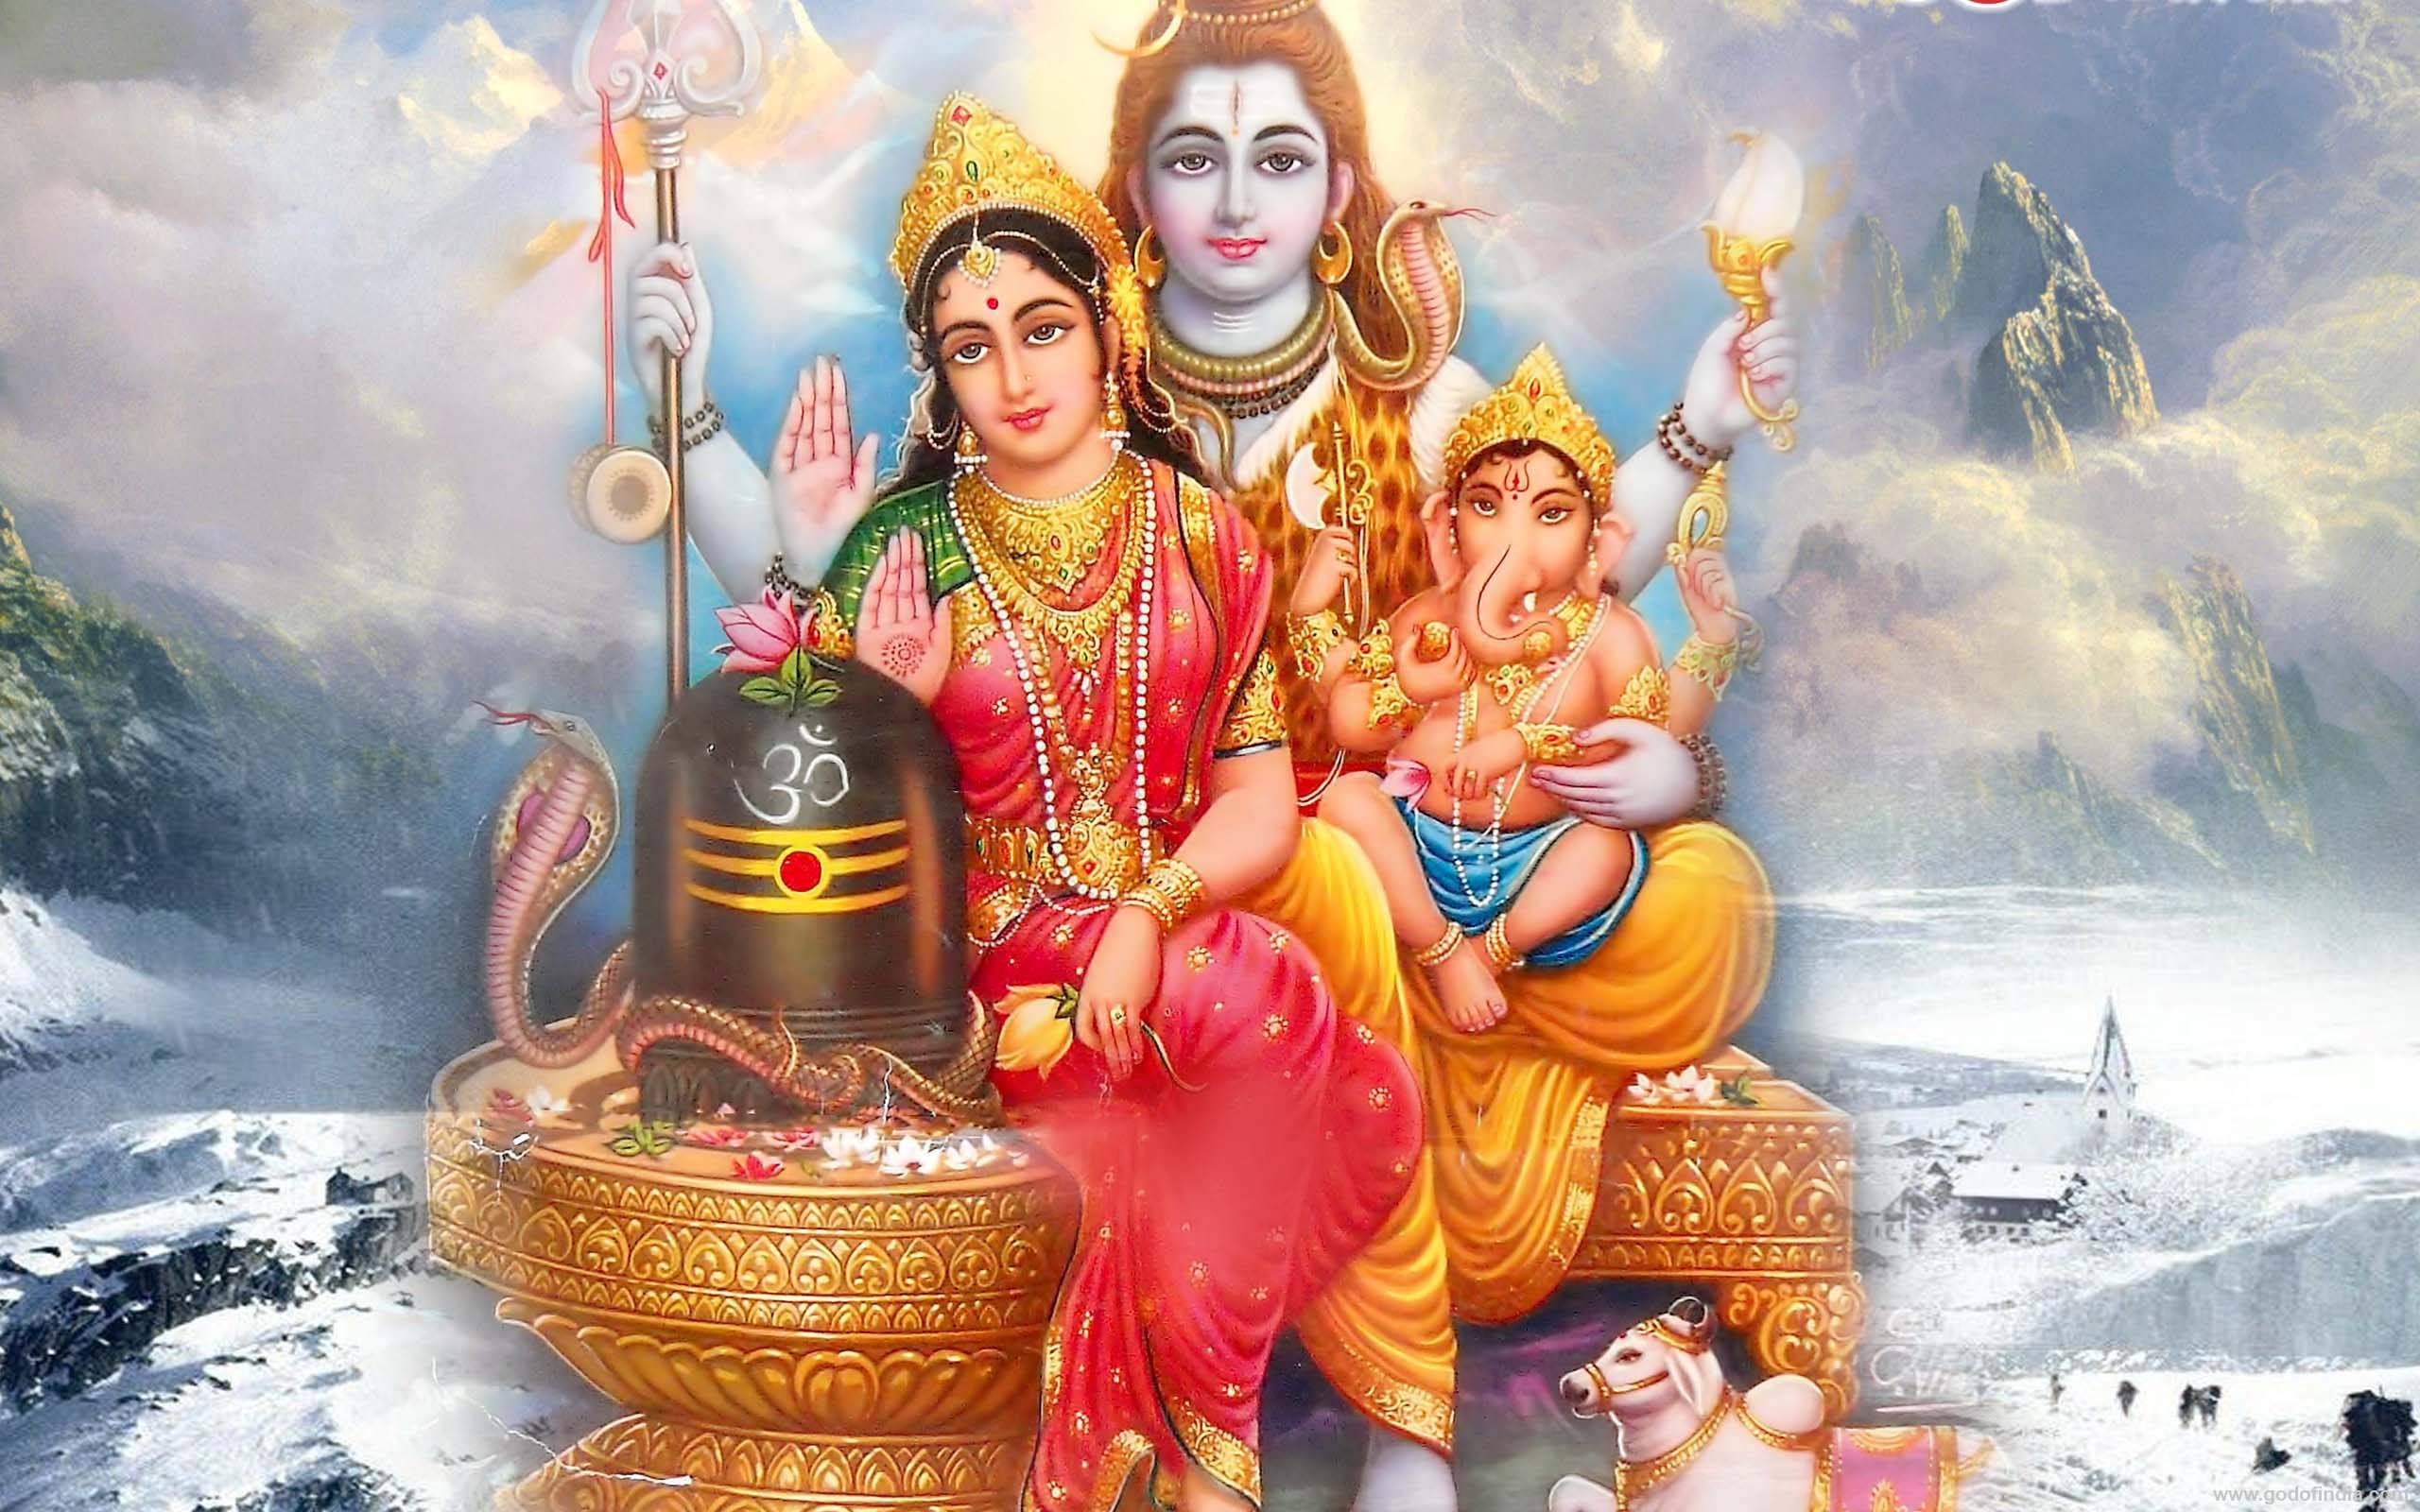 Lord Shiva Wallpapers High Resolution - WallpaperSafari